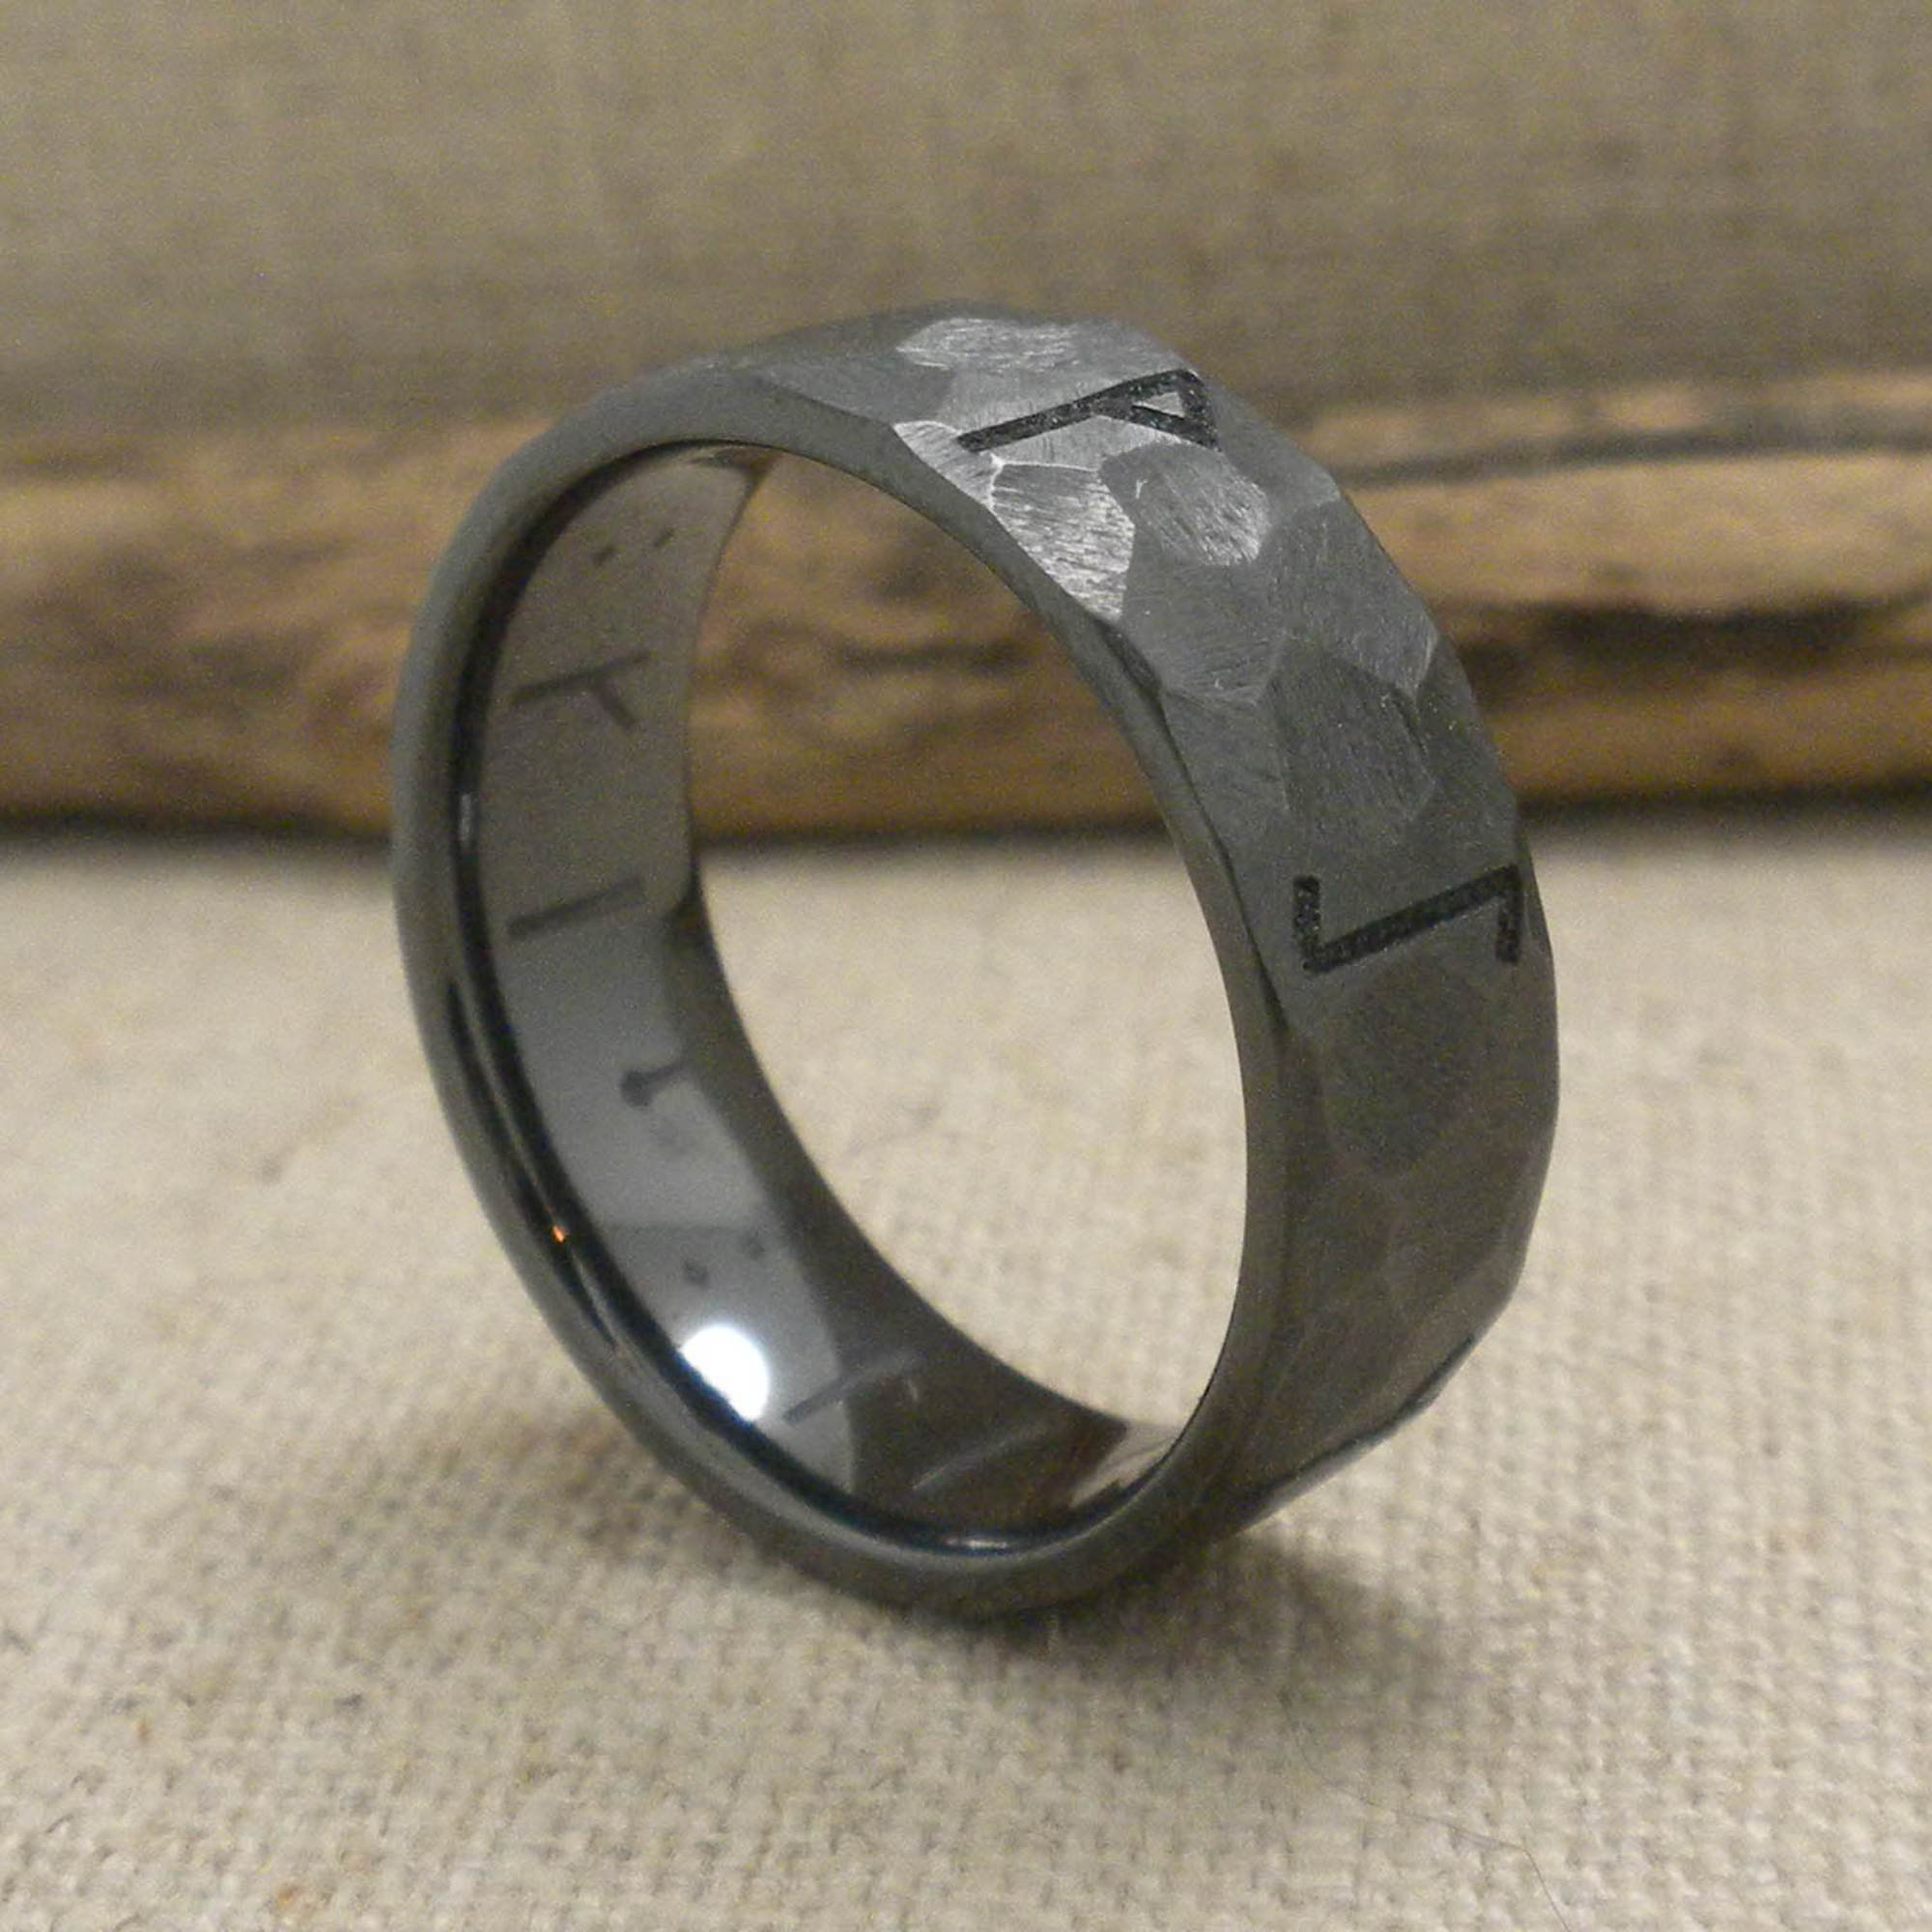 Rune wedding ring in Black Zirconium